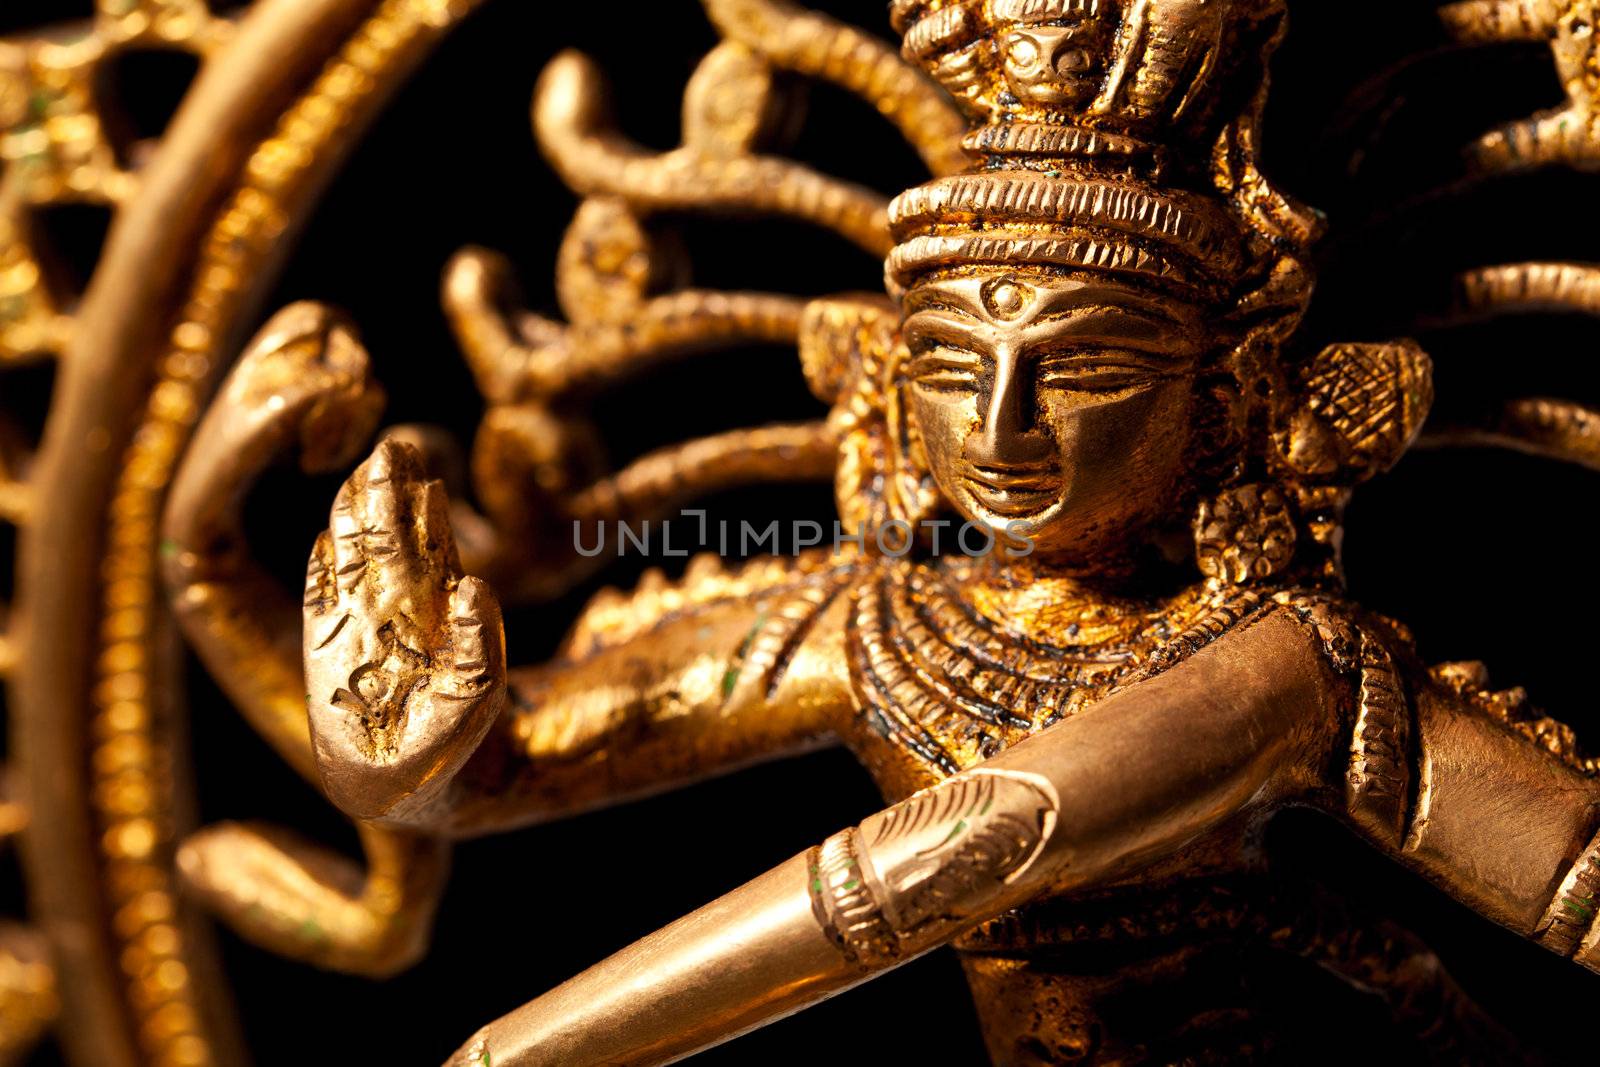 Statue of indian hindu god Shiva Nataraja - Lord of Dance close up